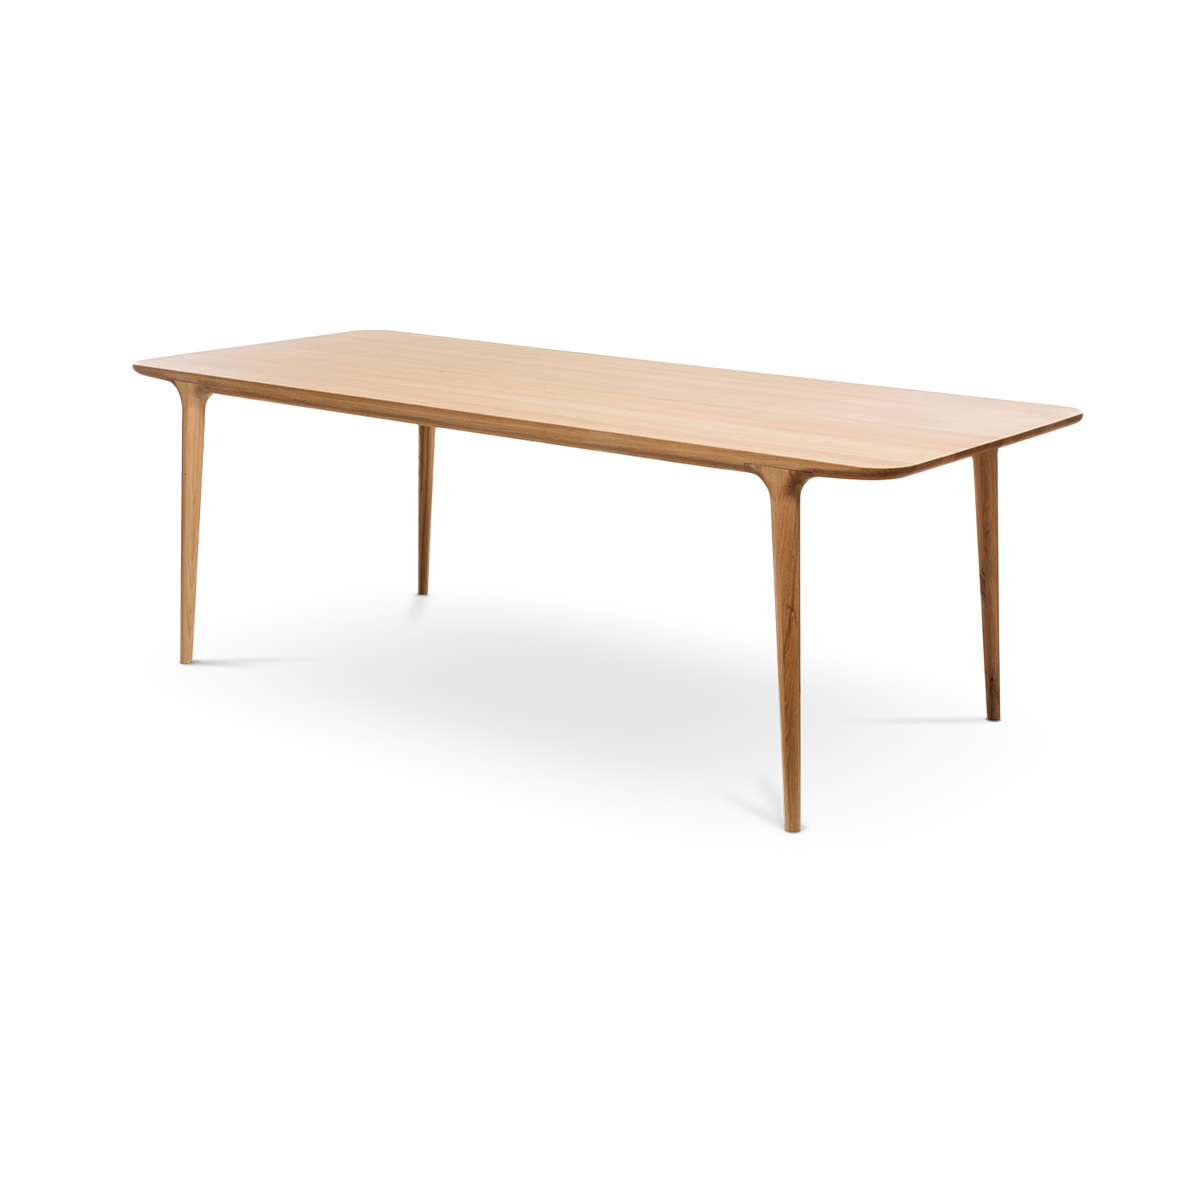 Fawn table houten eettafel naturel - 220 x 90 cm